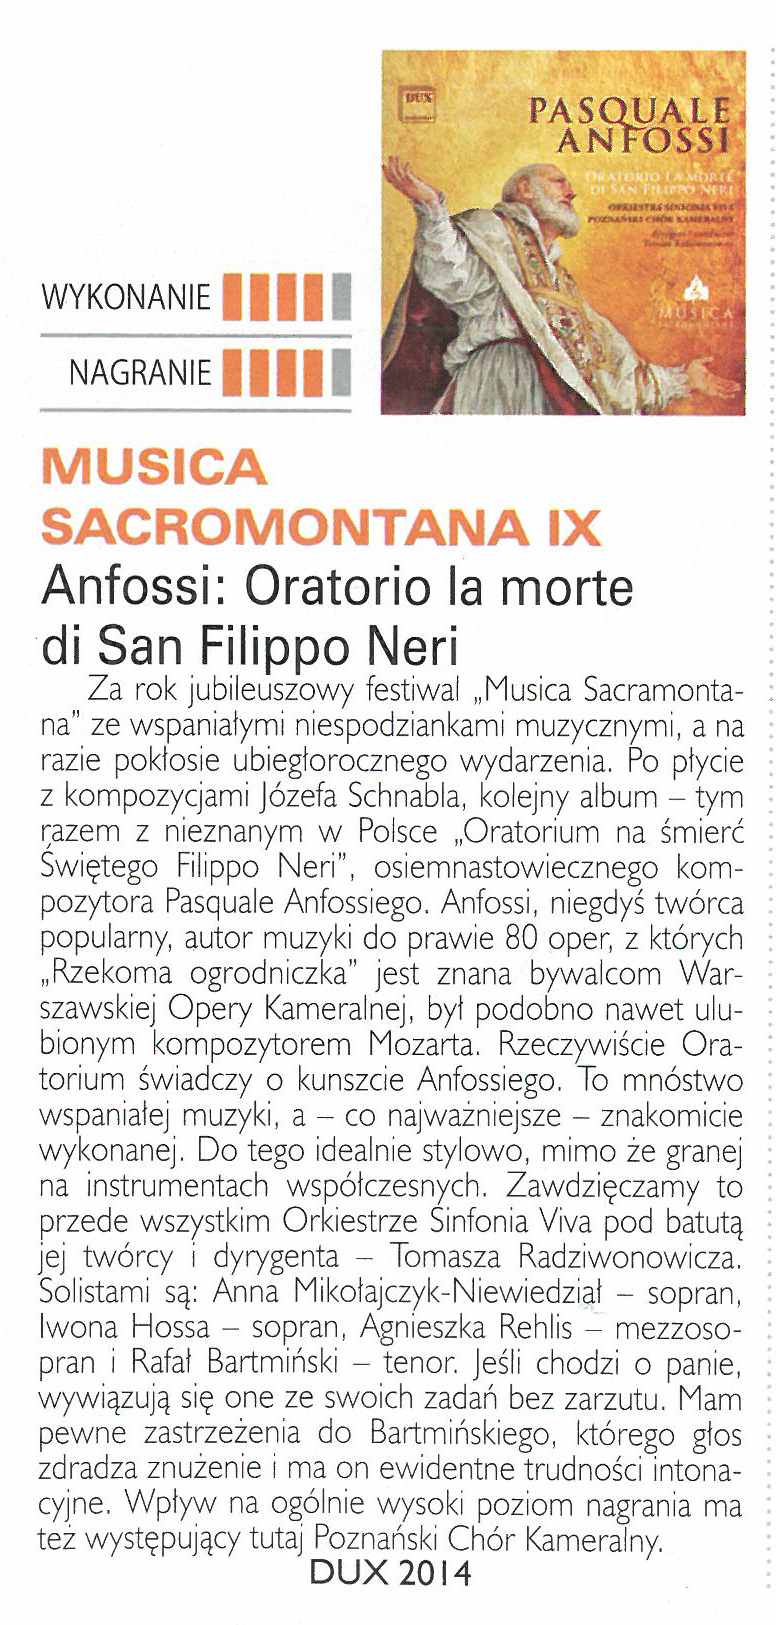 Recenzja płyty PASQUALE ANFOSSI - MUSICA SACROMONTANA IX, AUDIO 10/2014